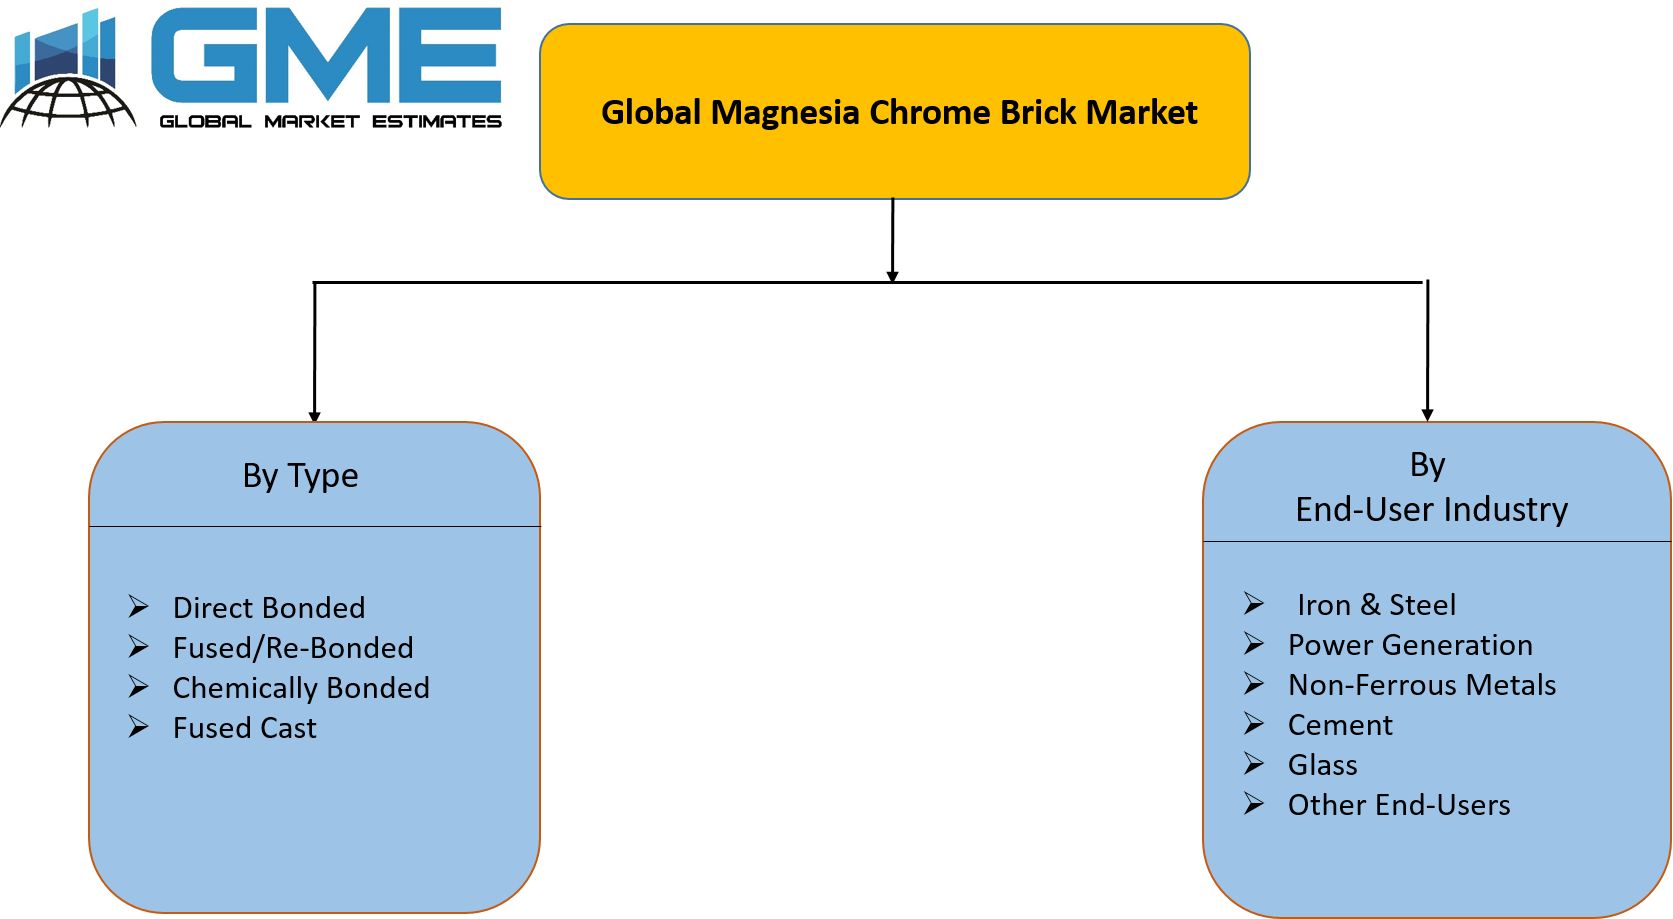 Global Magnesia Chrome Brick Market Segmentation